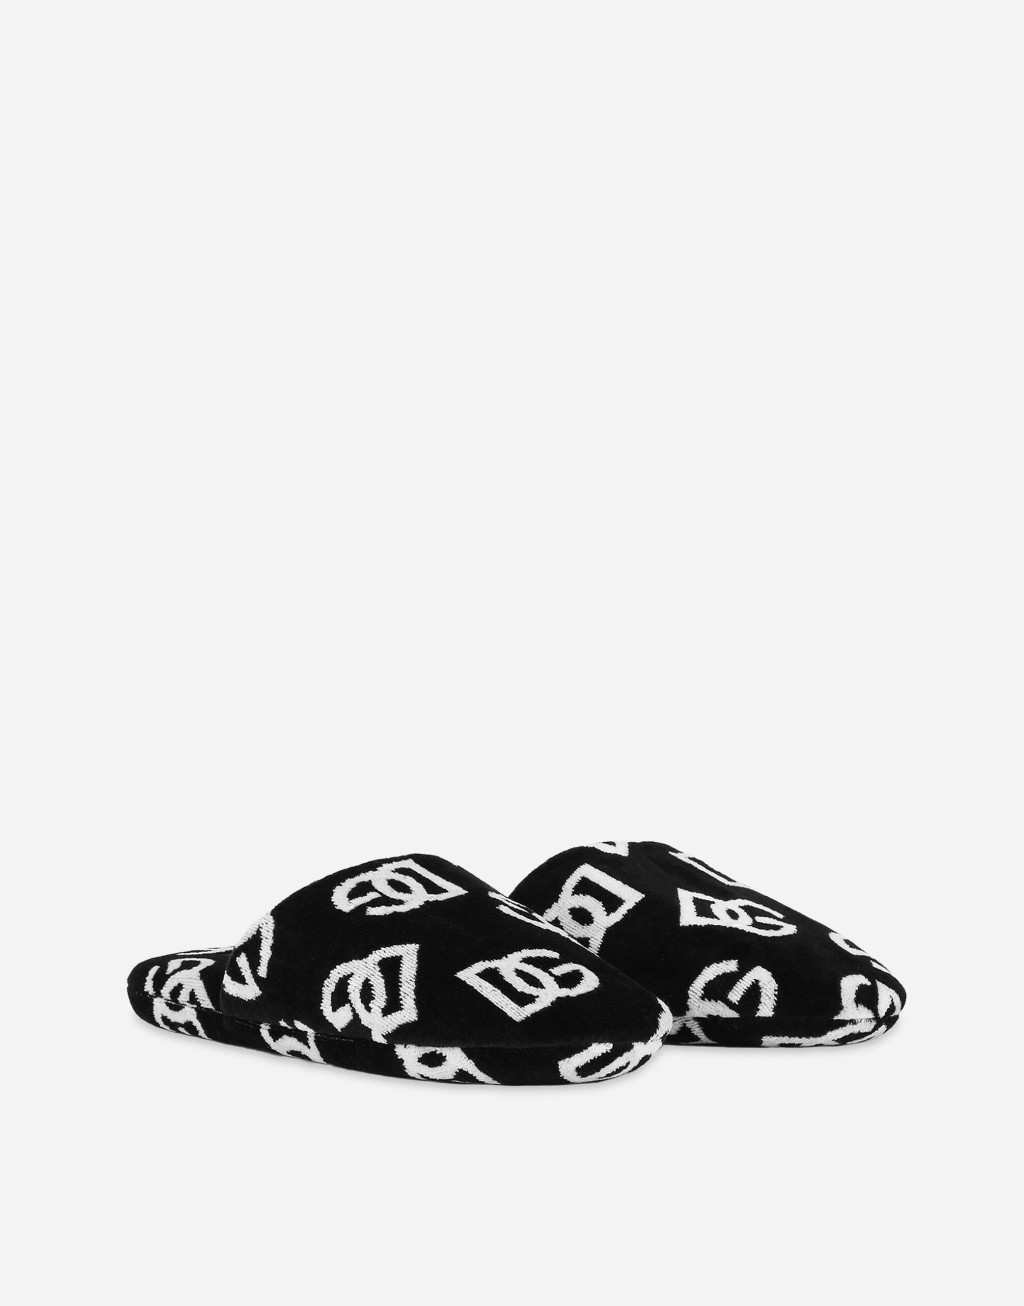 Dolce&Gabbana黑白色DG Logo棉質拖鞋。